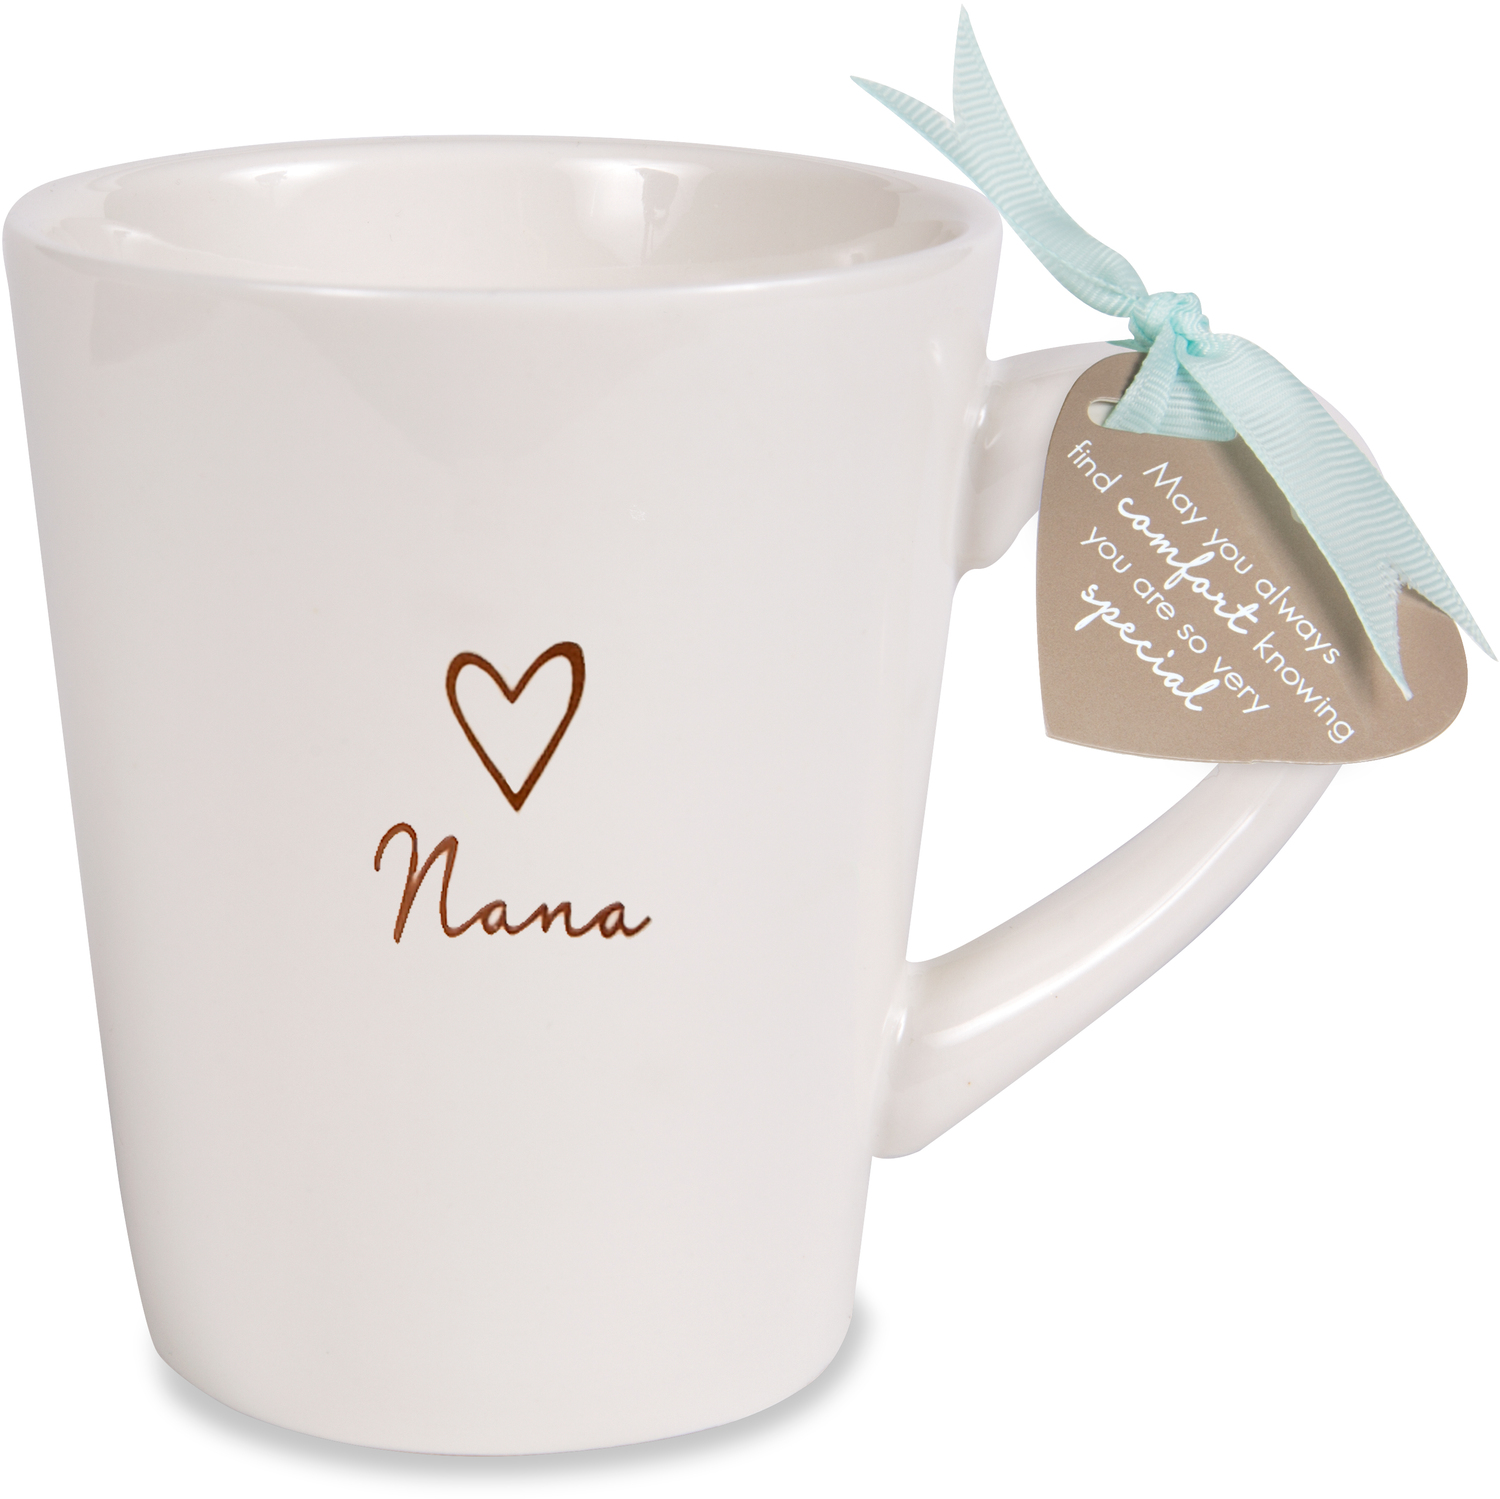 Nana by Comfort Collection - Nana - 15 oz Cup